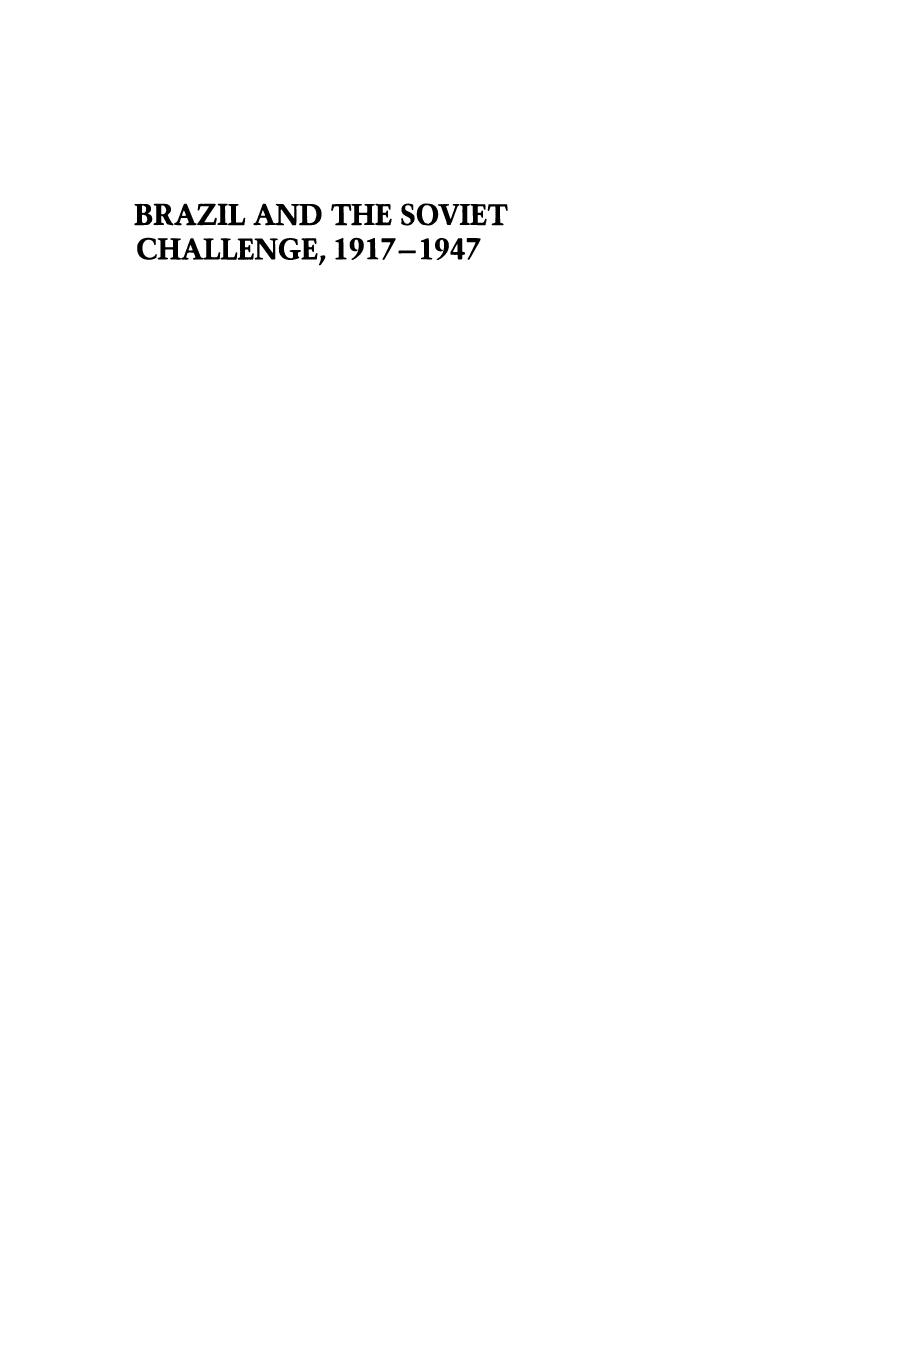 Brazil and the Soviet Challenge, 1917â1947 by Stanley E. Hilton